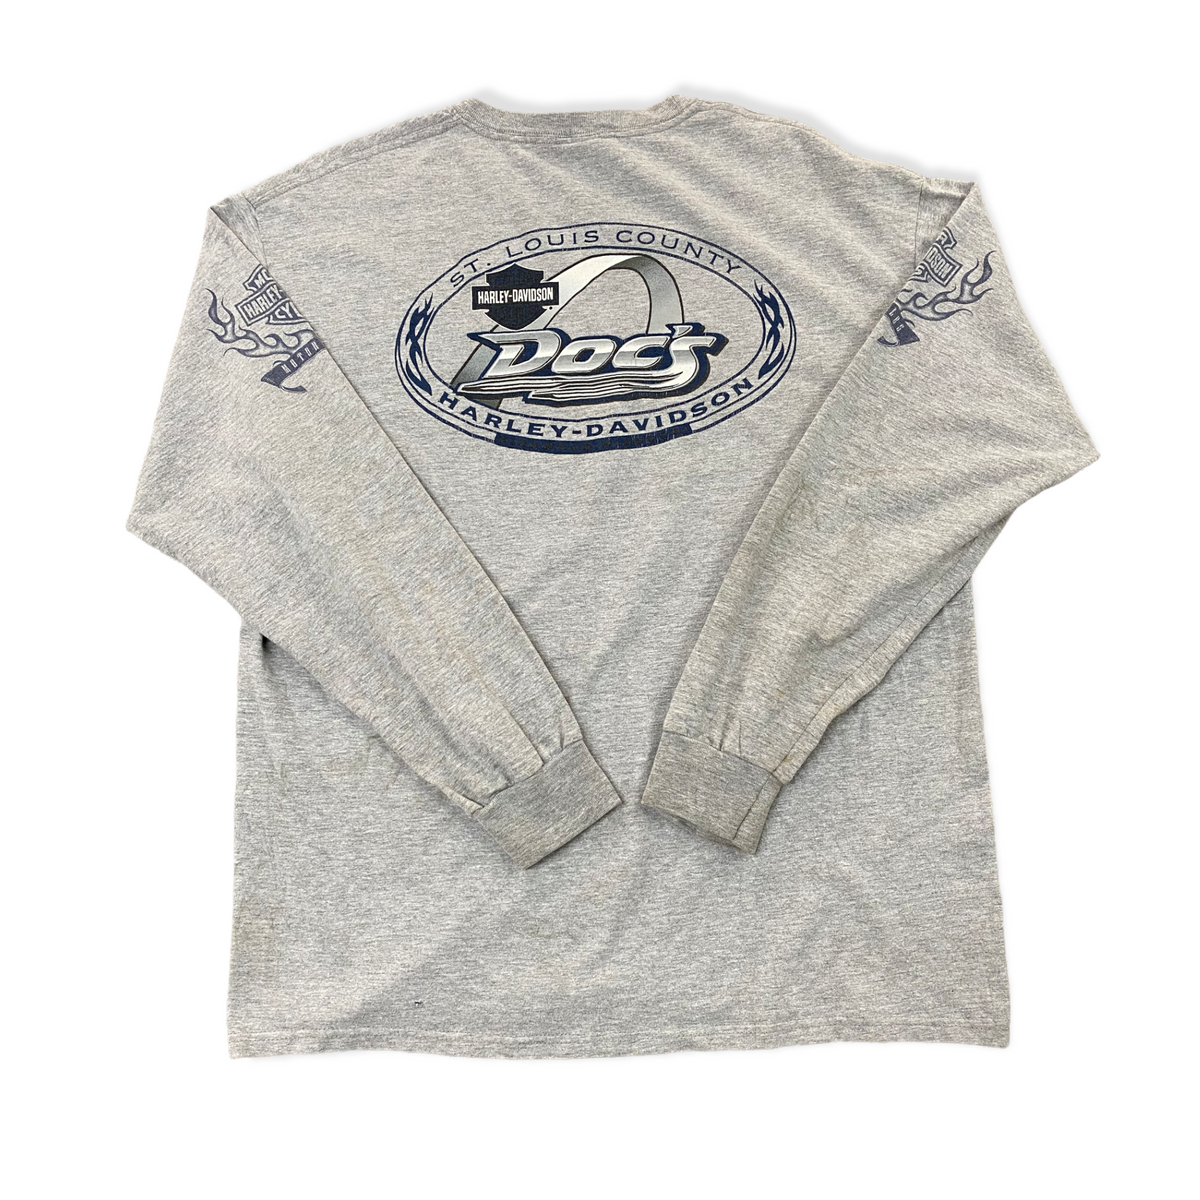 Vintage Long Sleeve Harley Davidson T-Shirt